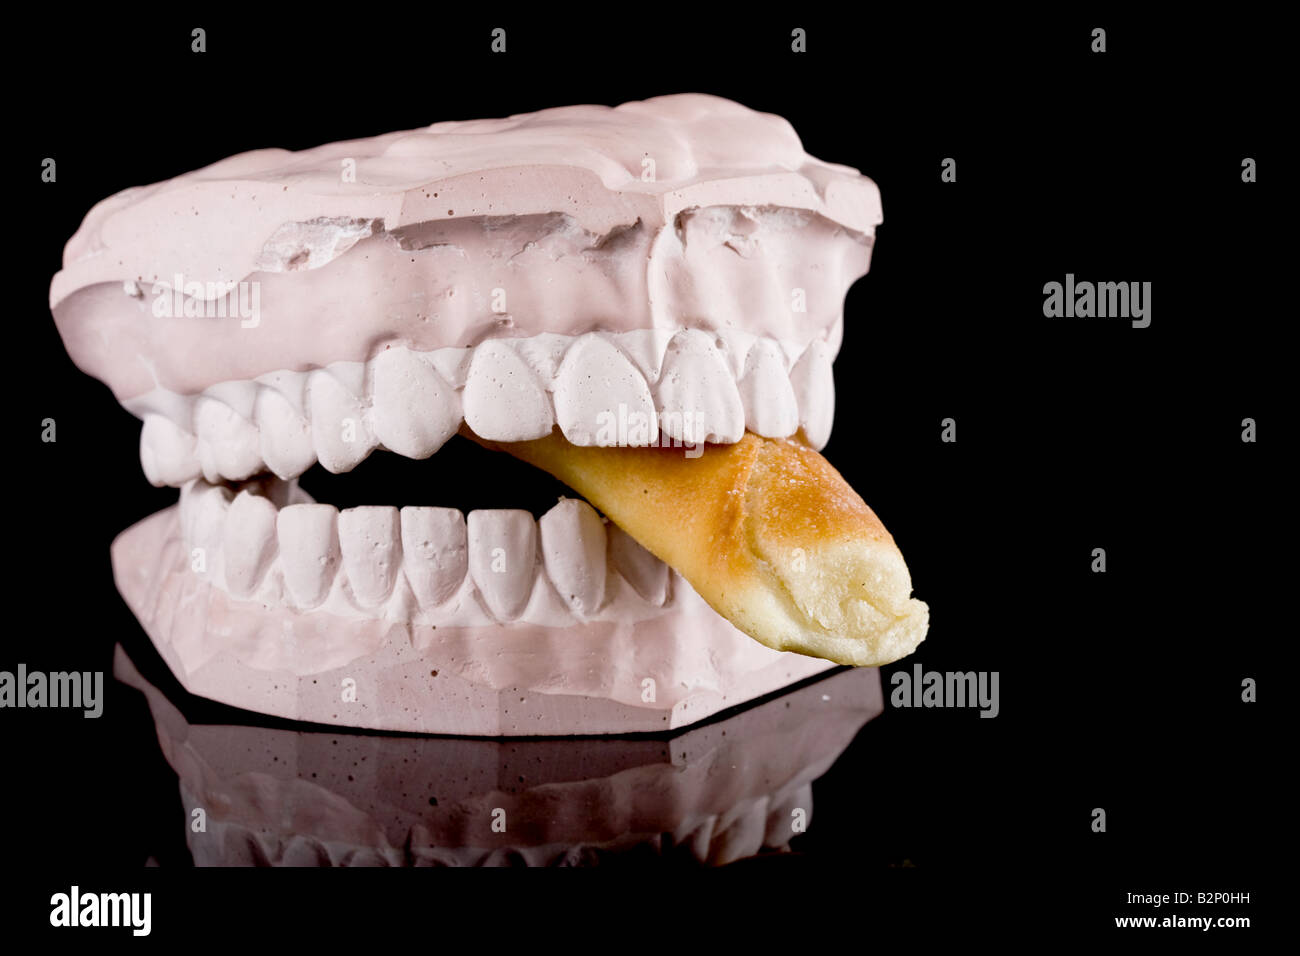 gypsum model of a human teeth with food Stock Photo